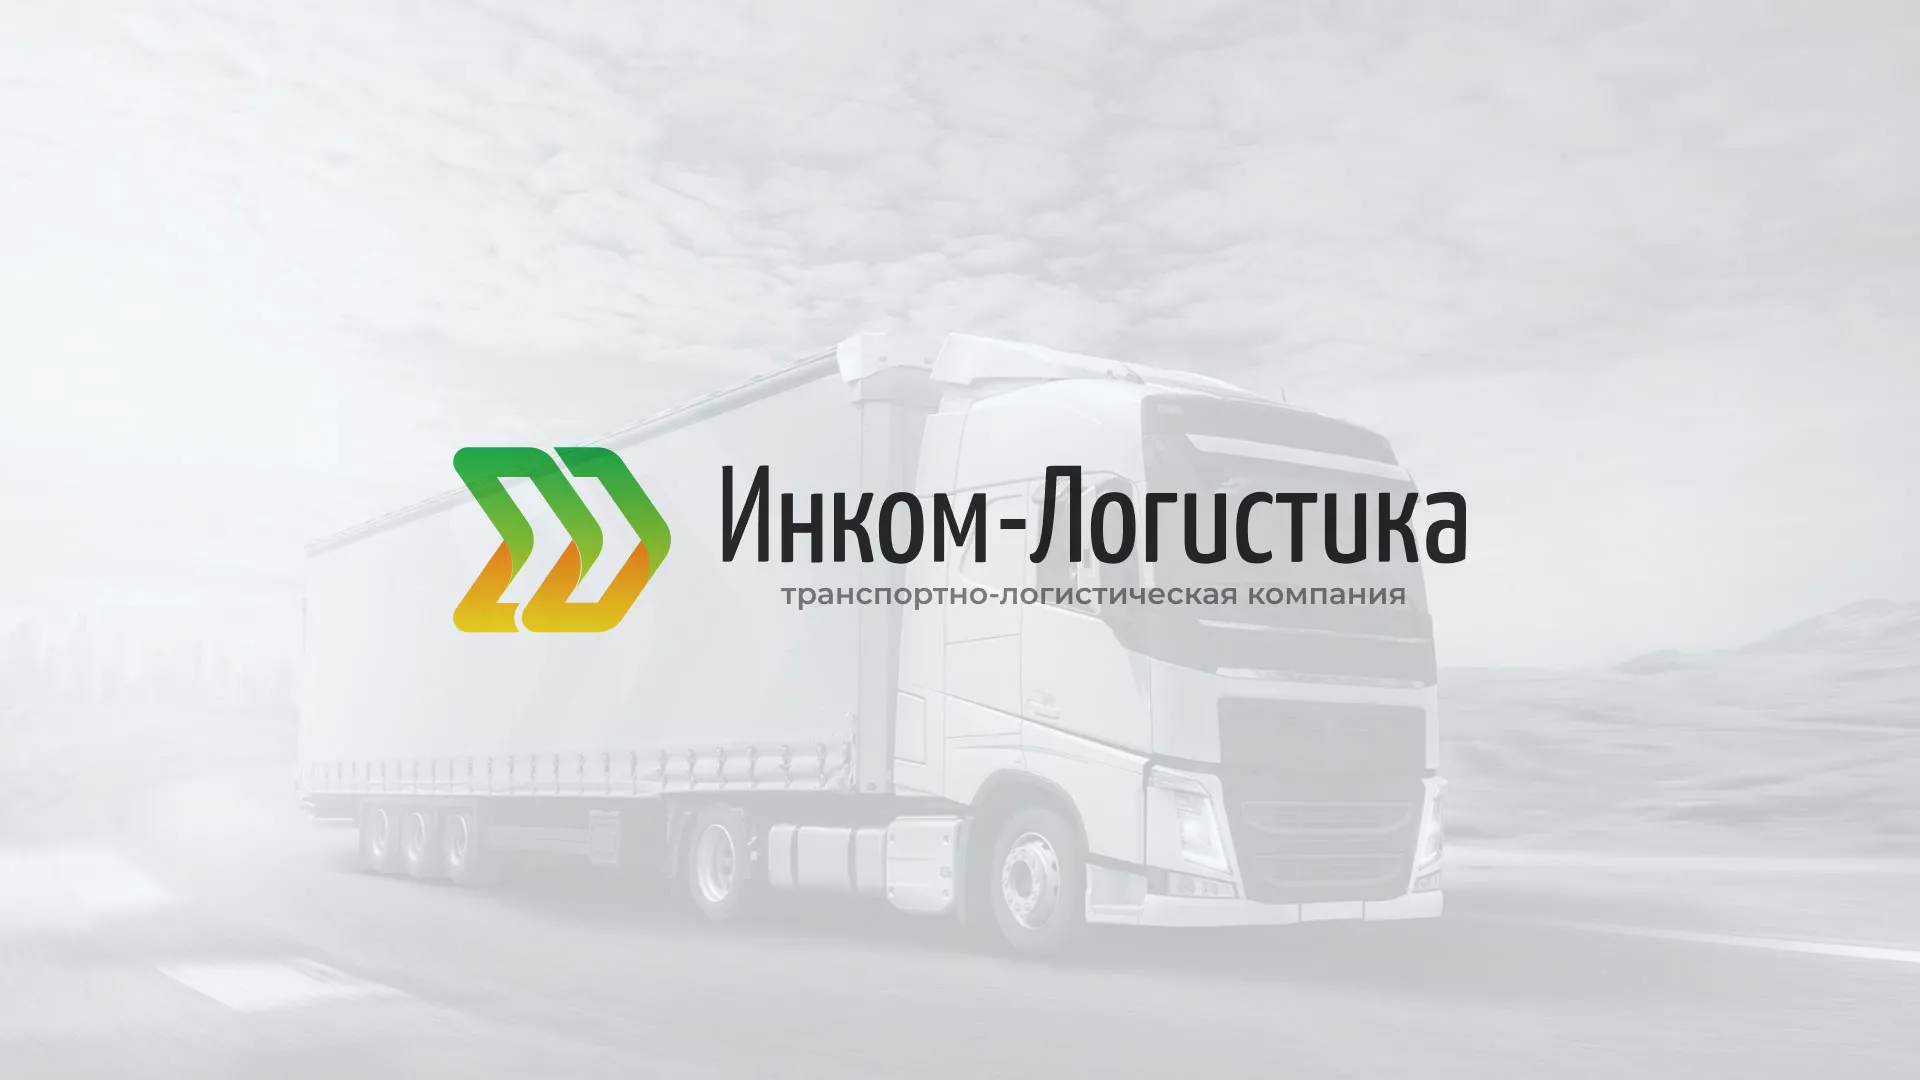 Разработка логотипа и сайта компании «Инком-Логистика» в Кисловодске